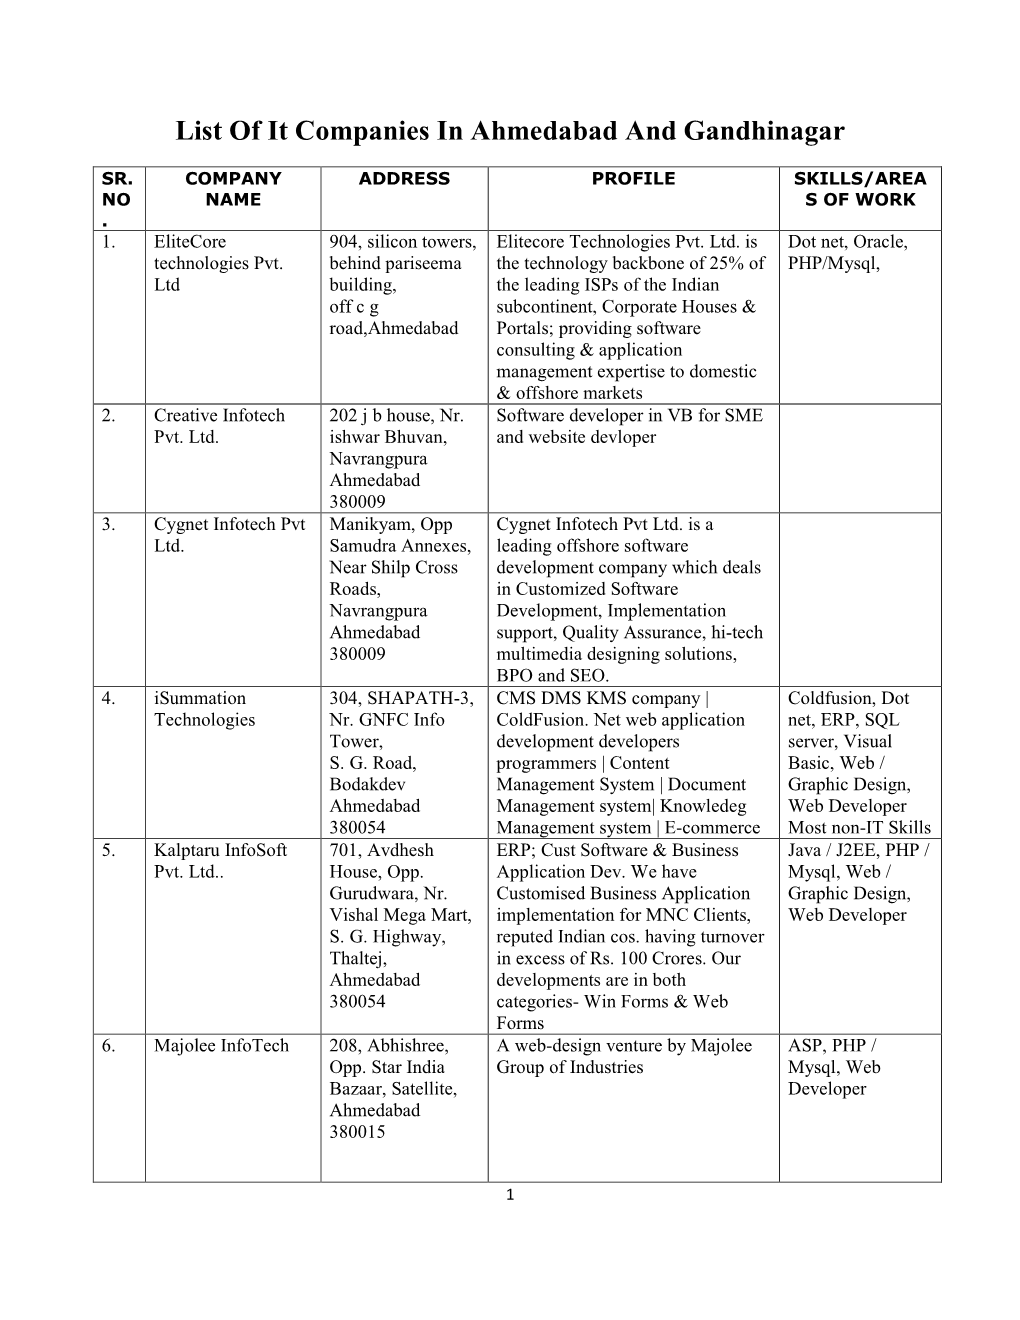 List of It Companies in Ahmedabad and Gandhinagar